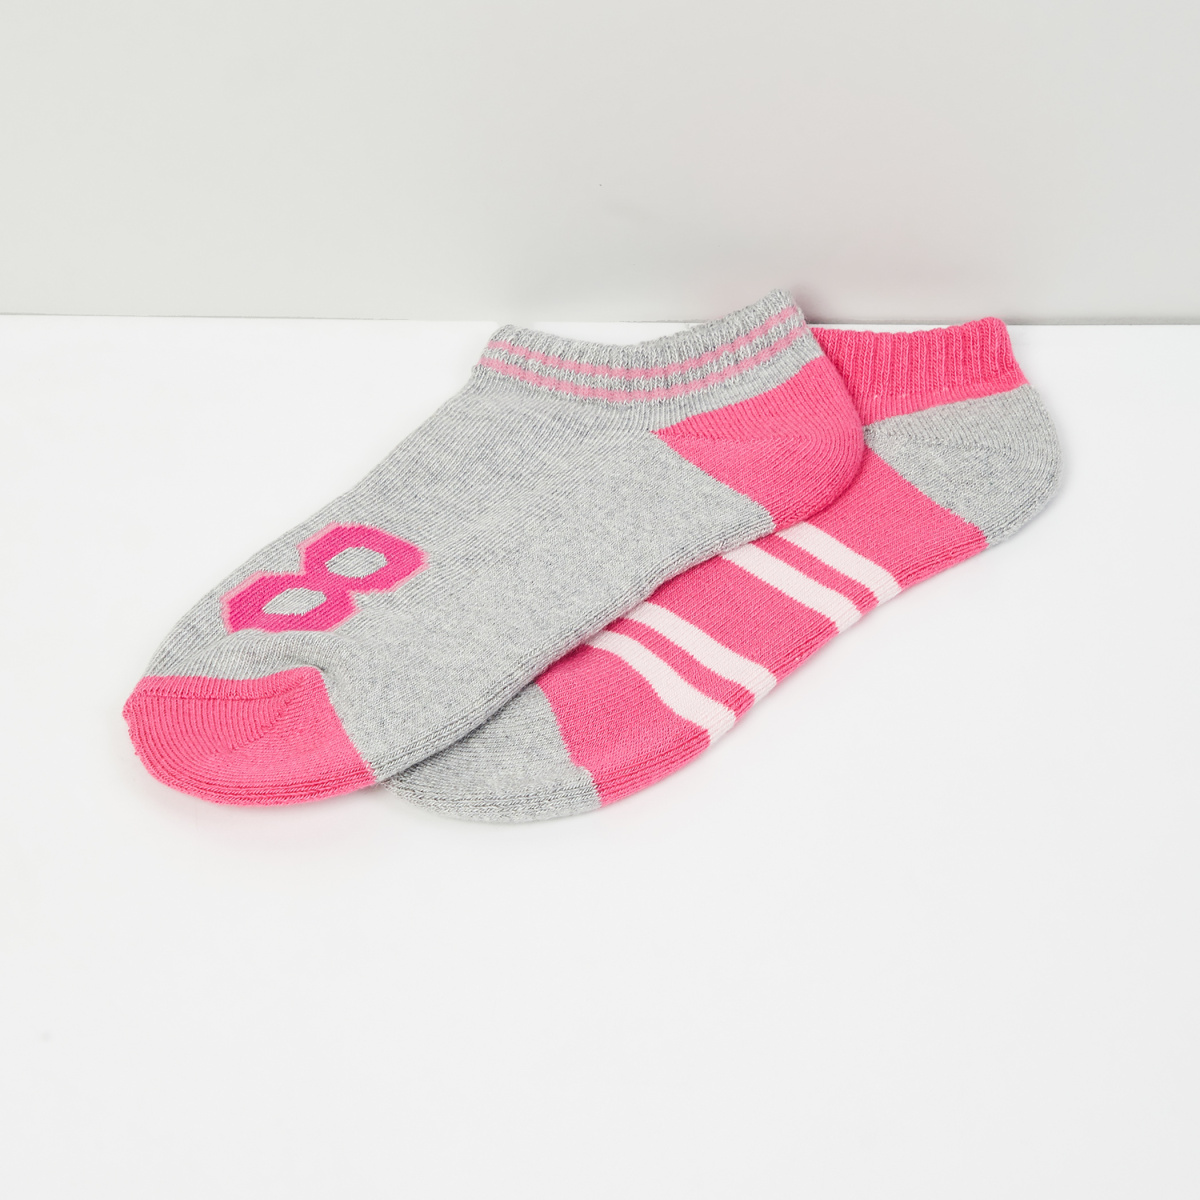 MAX Woven Design Socks- Set of 2